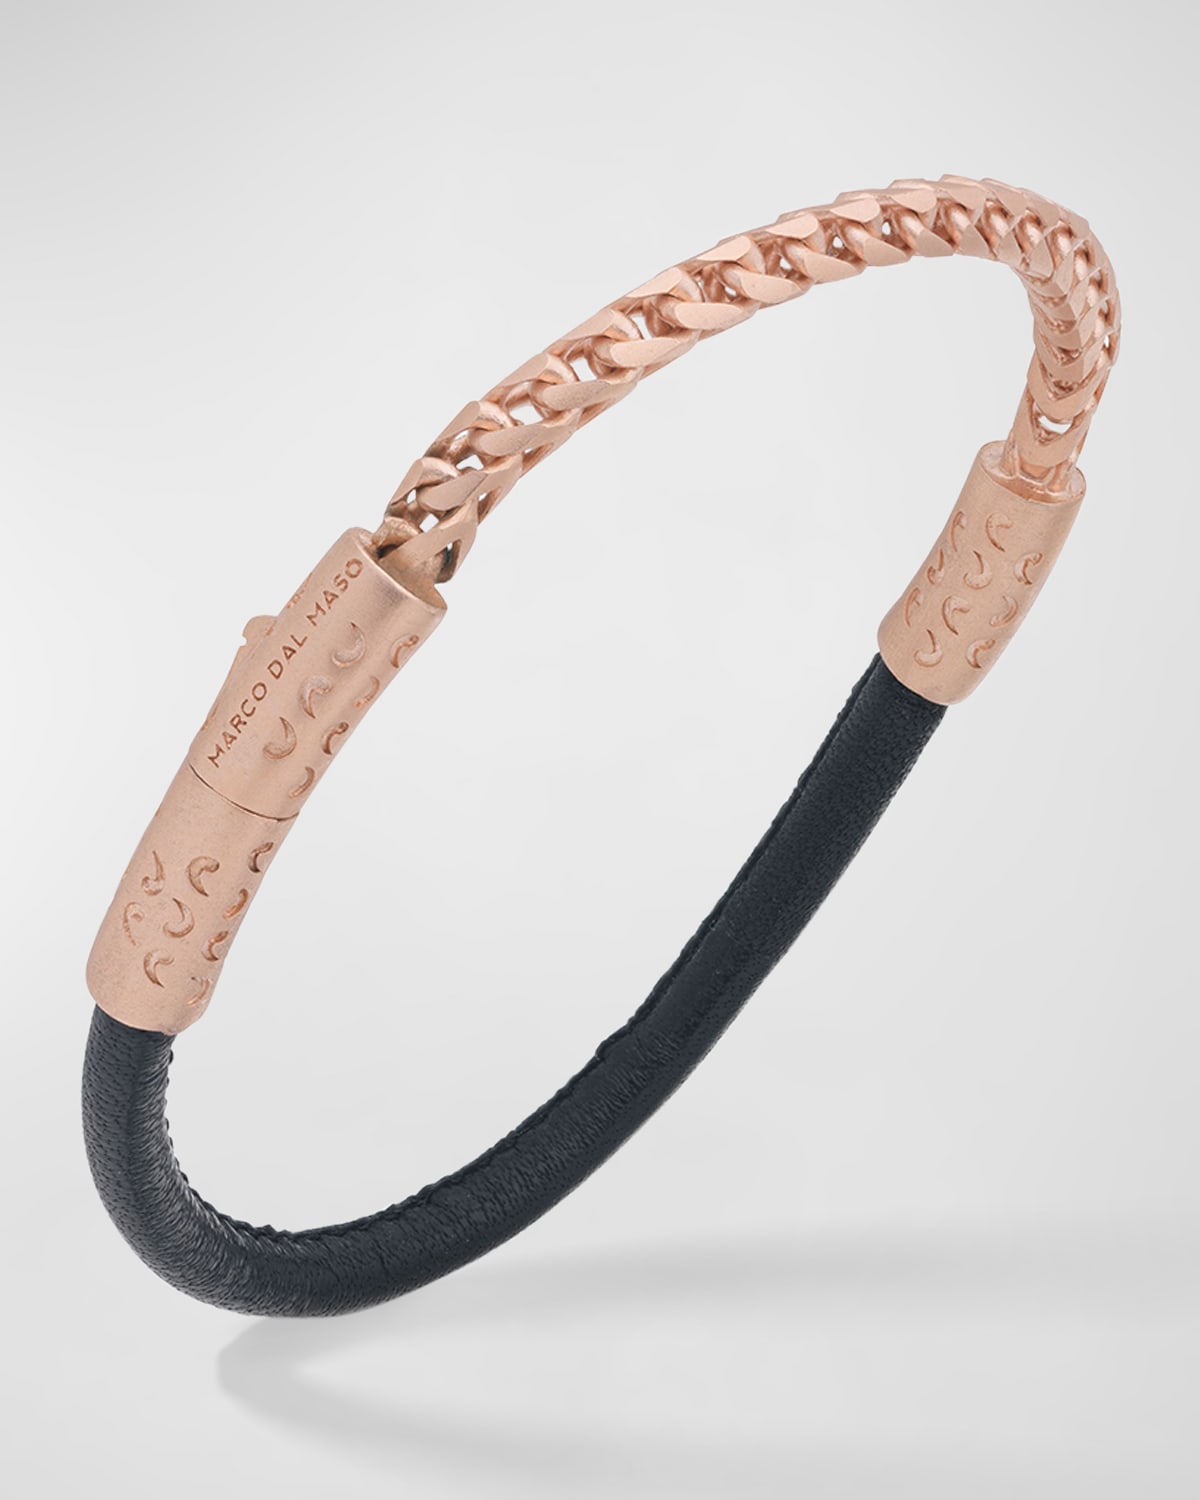 Men's Lash Leather Franco Chain Combo Bracelet, Gold